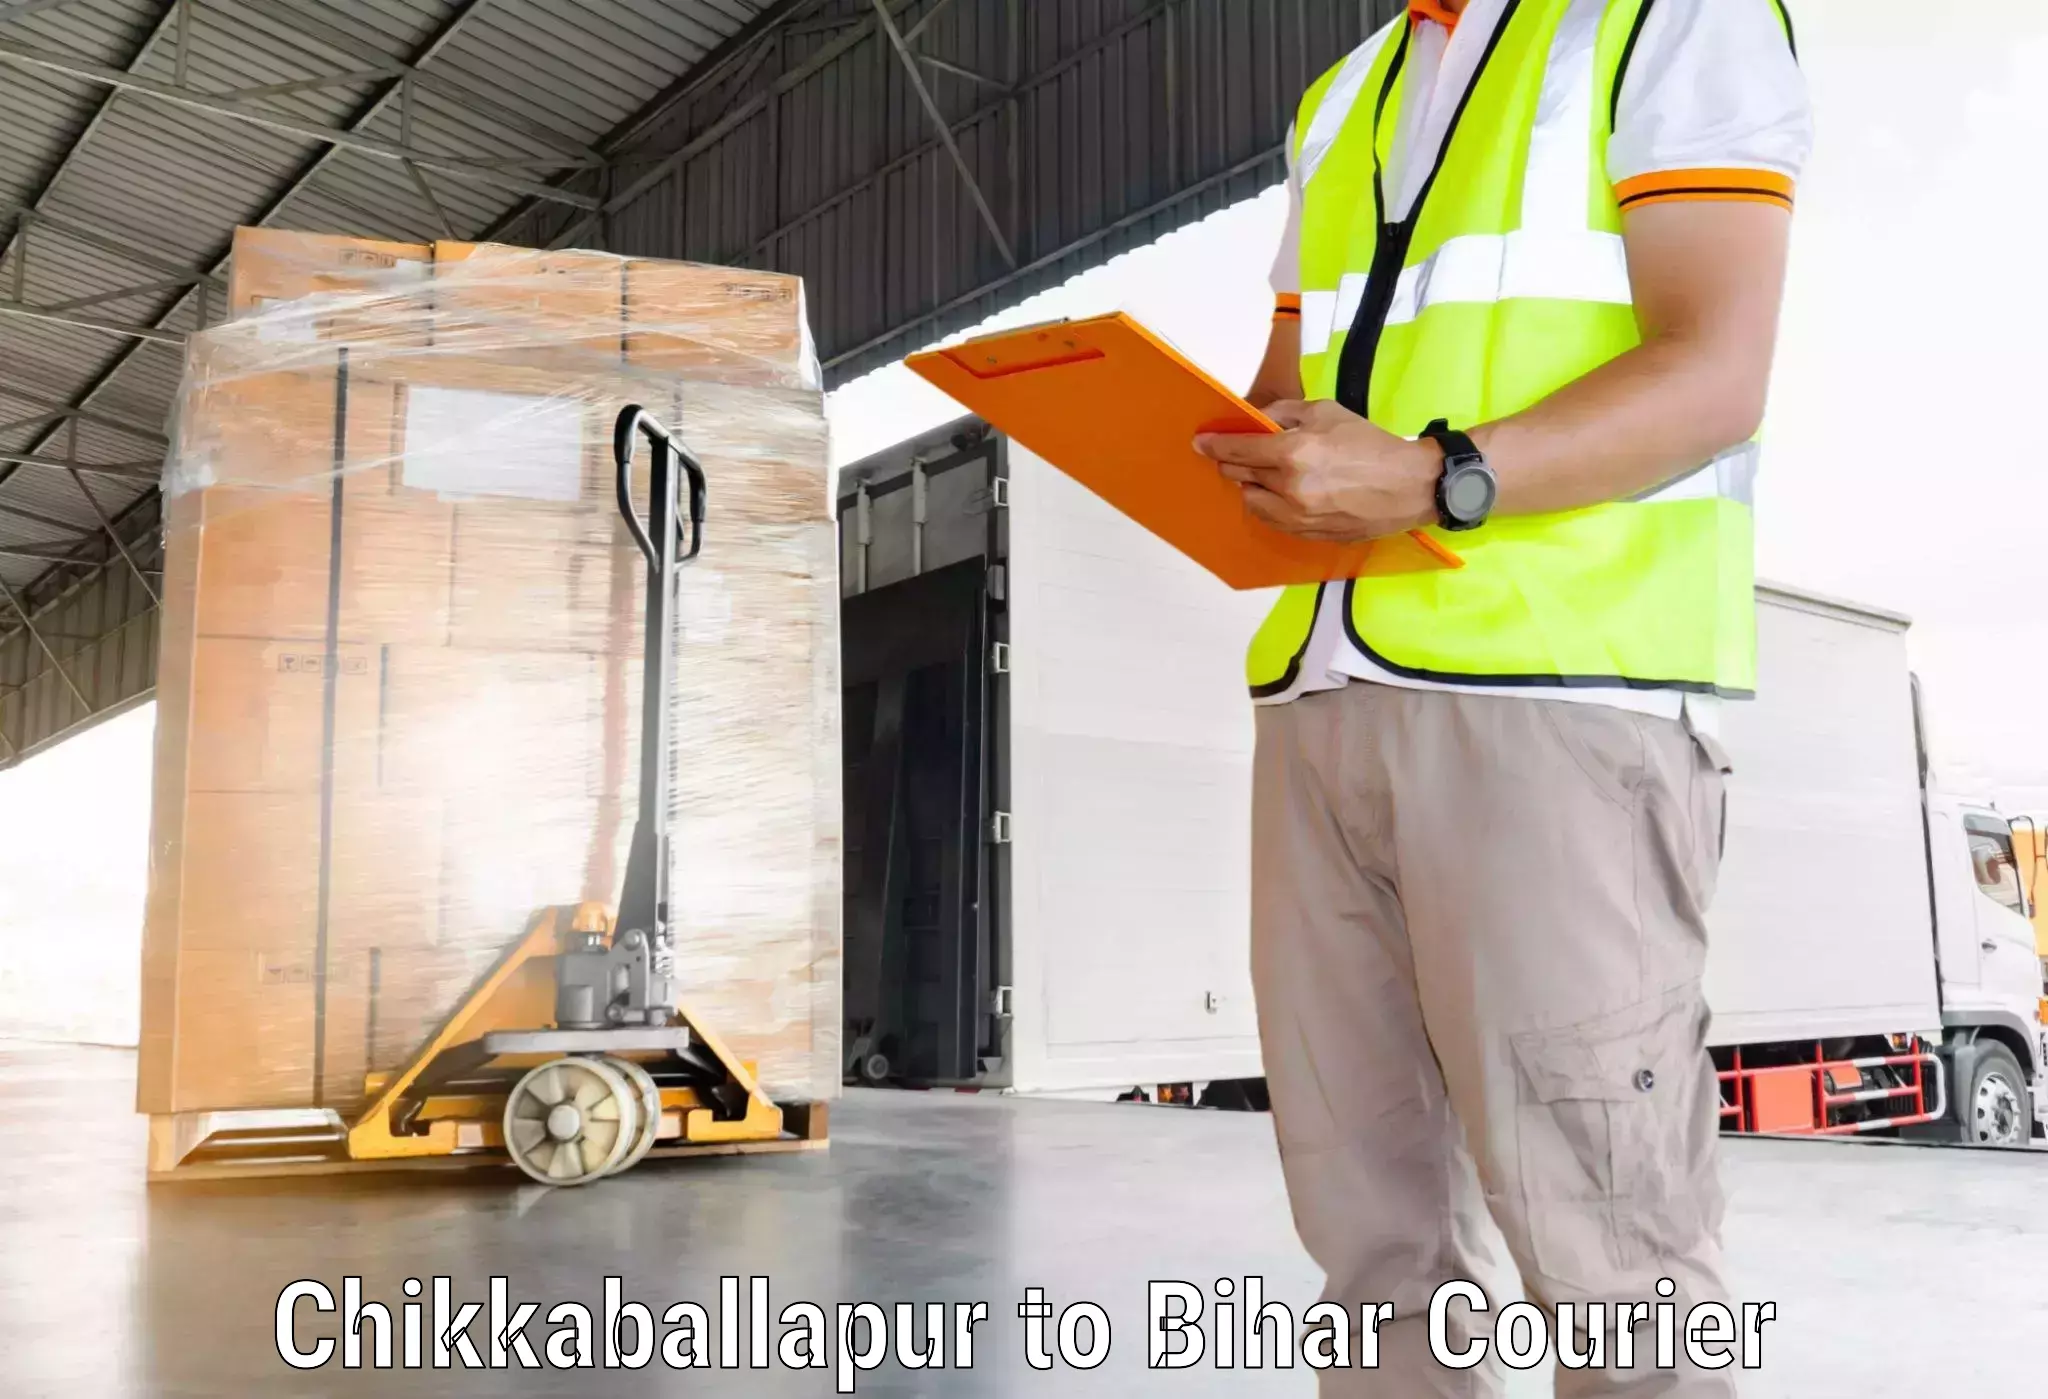 Global logistics network Chikkaballapur to Sheikhpura